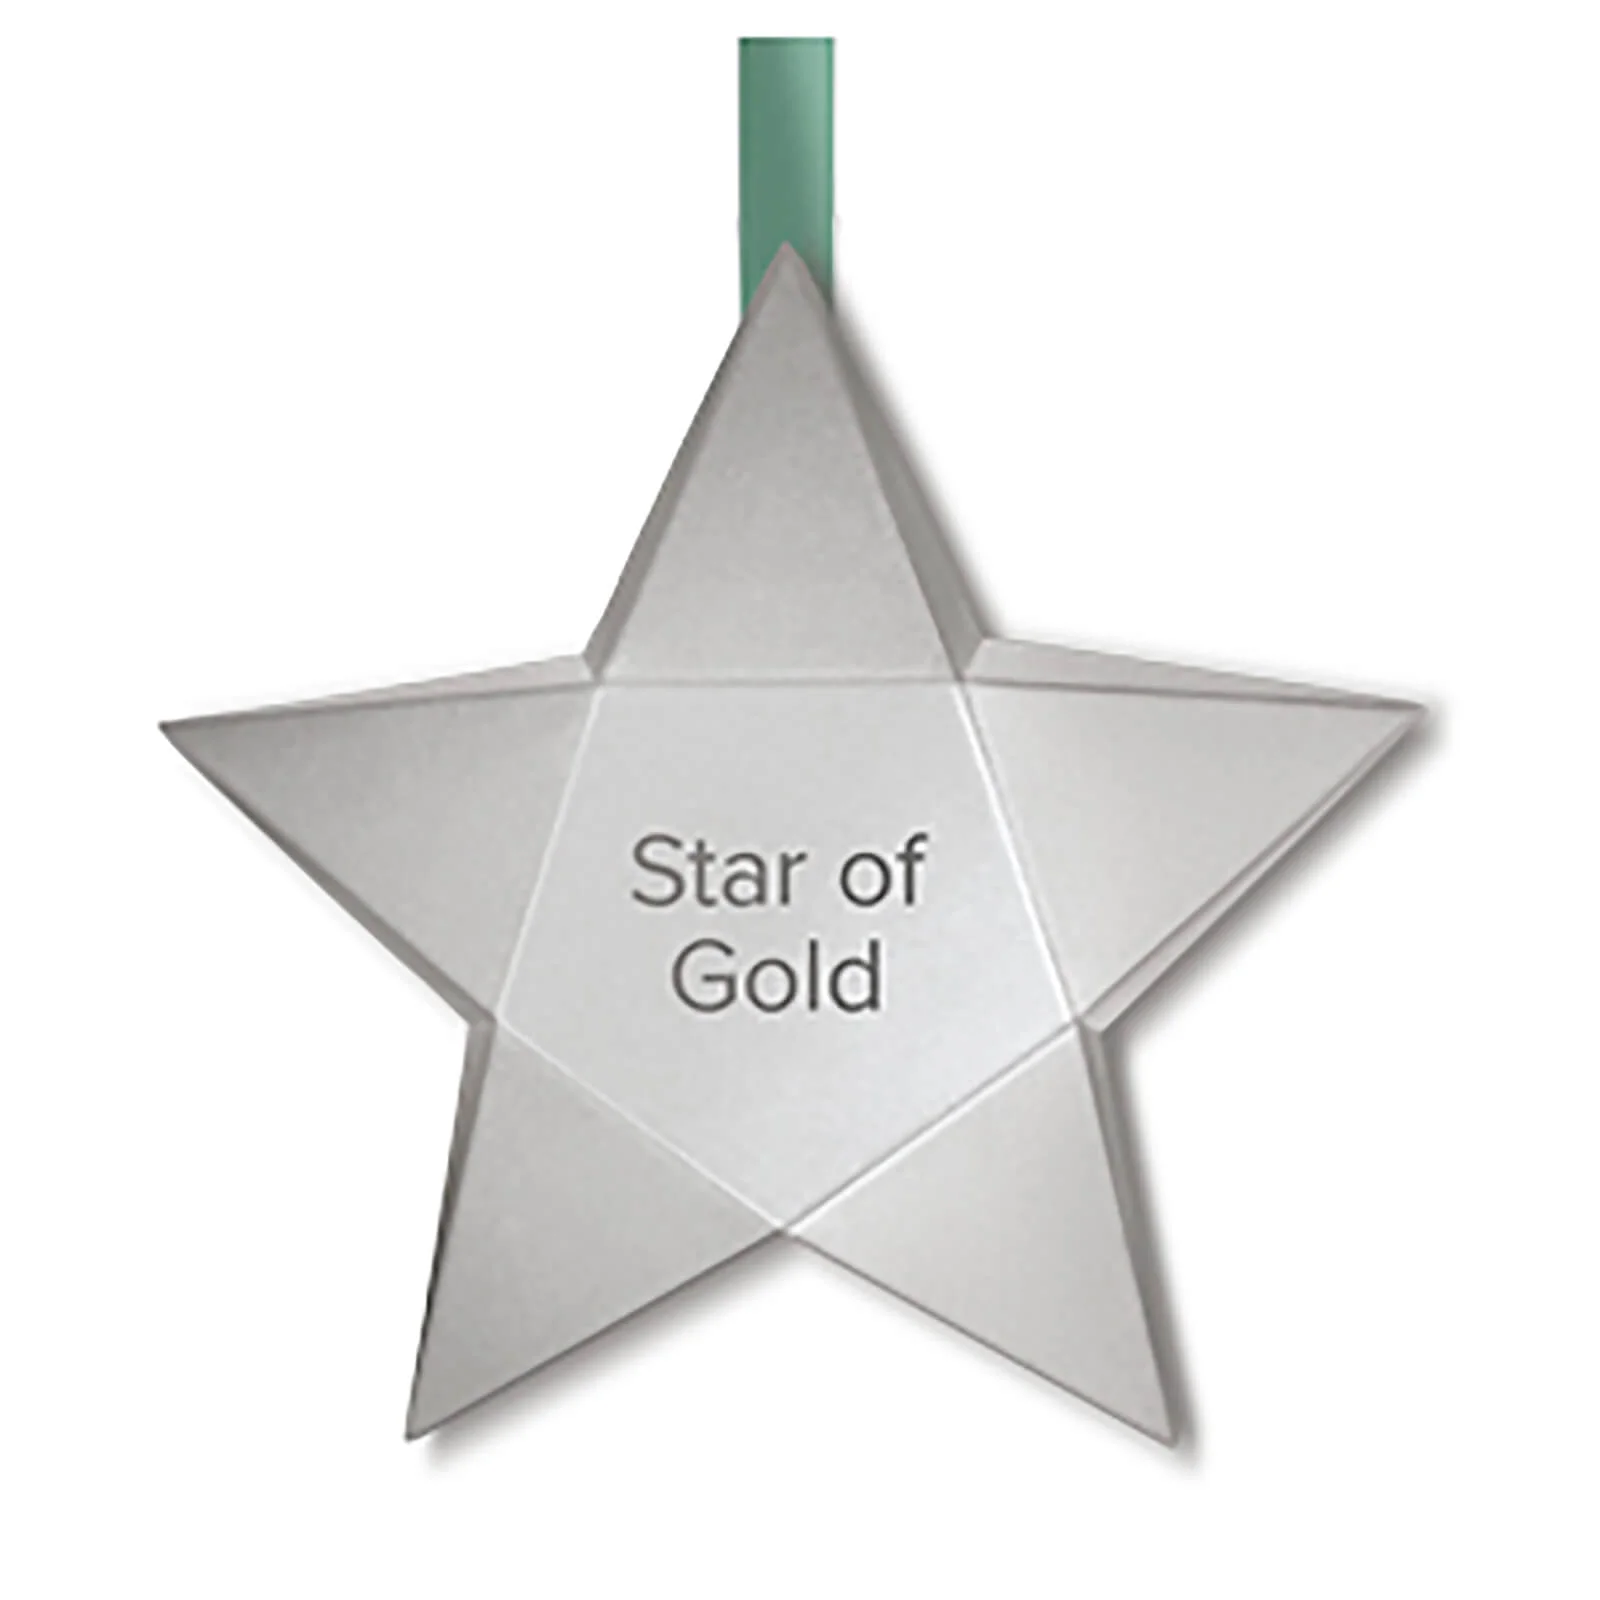 ESPA Star of Gold Image 1